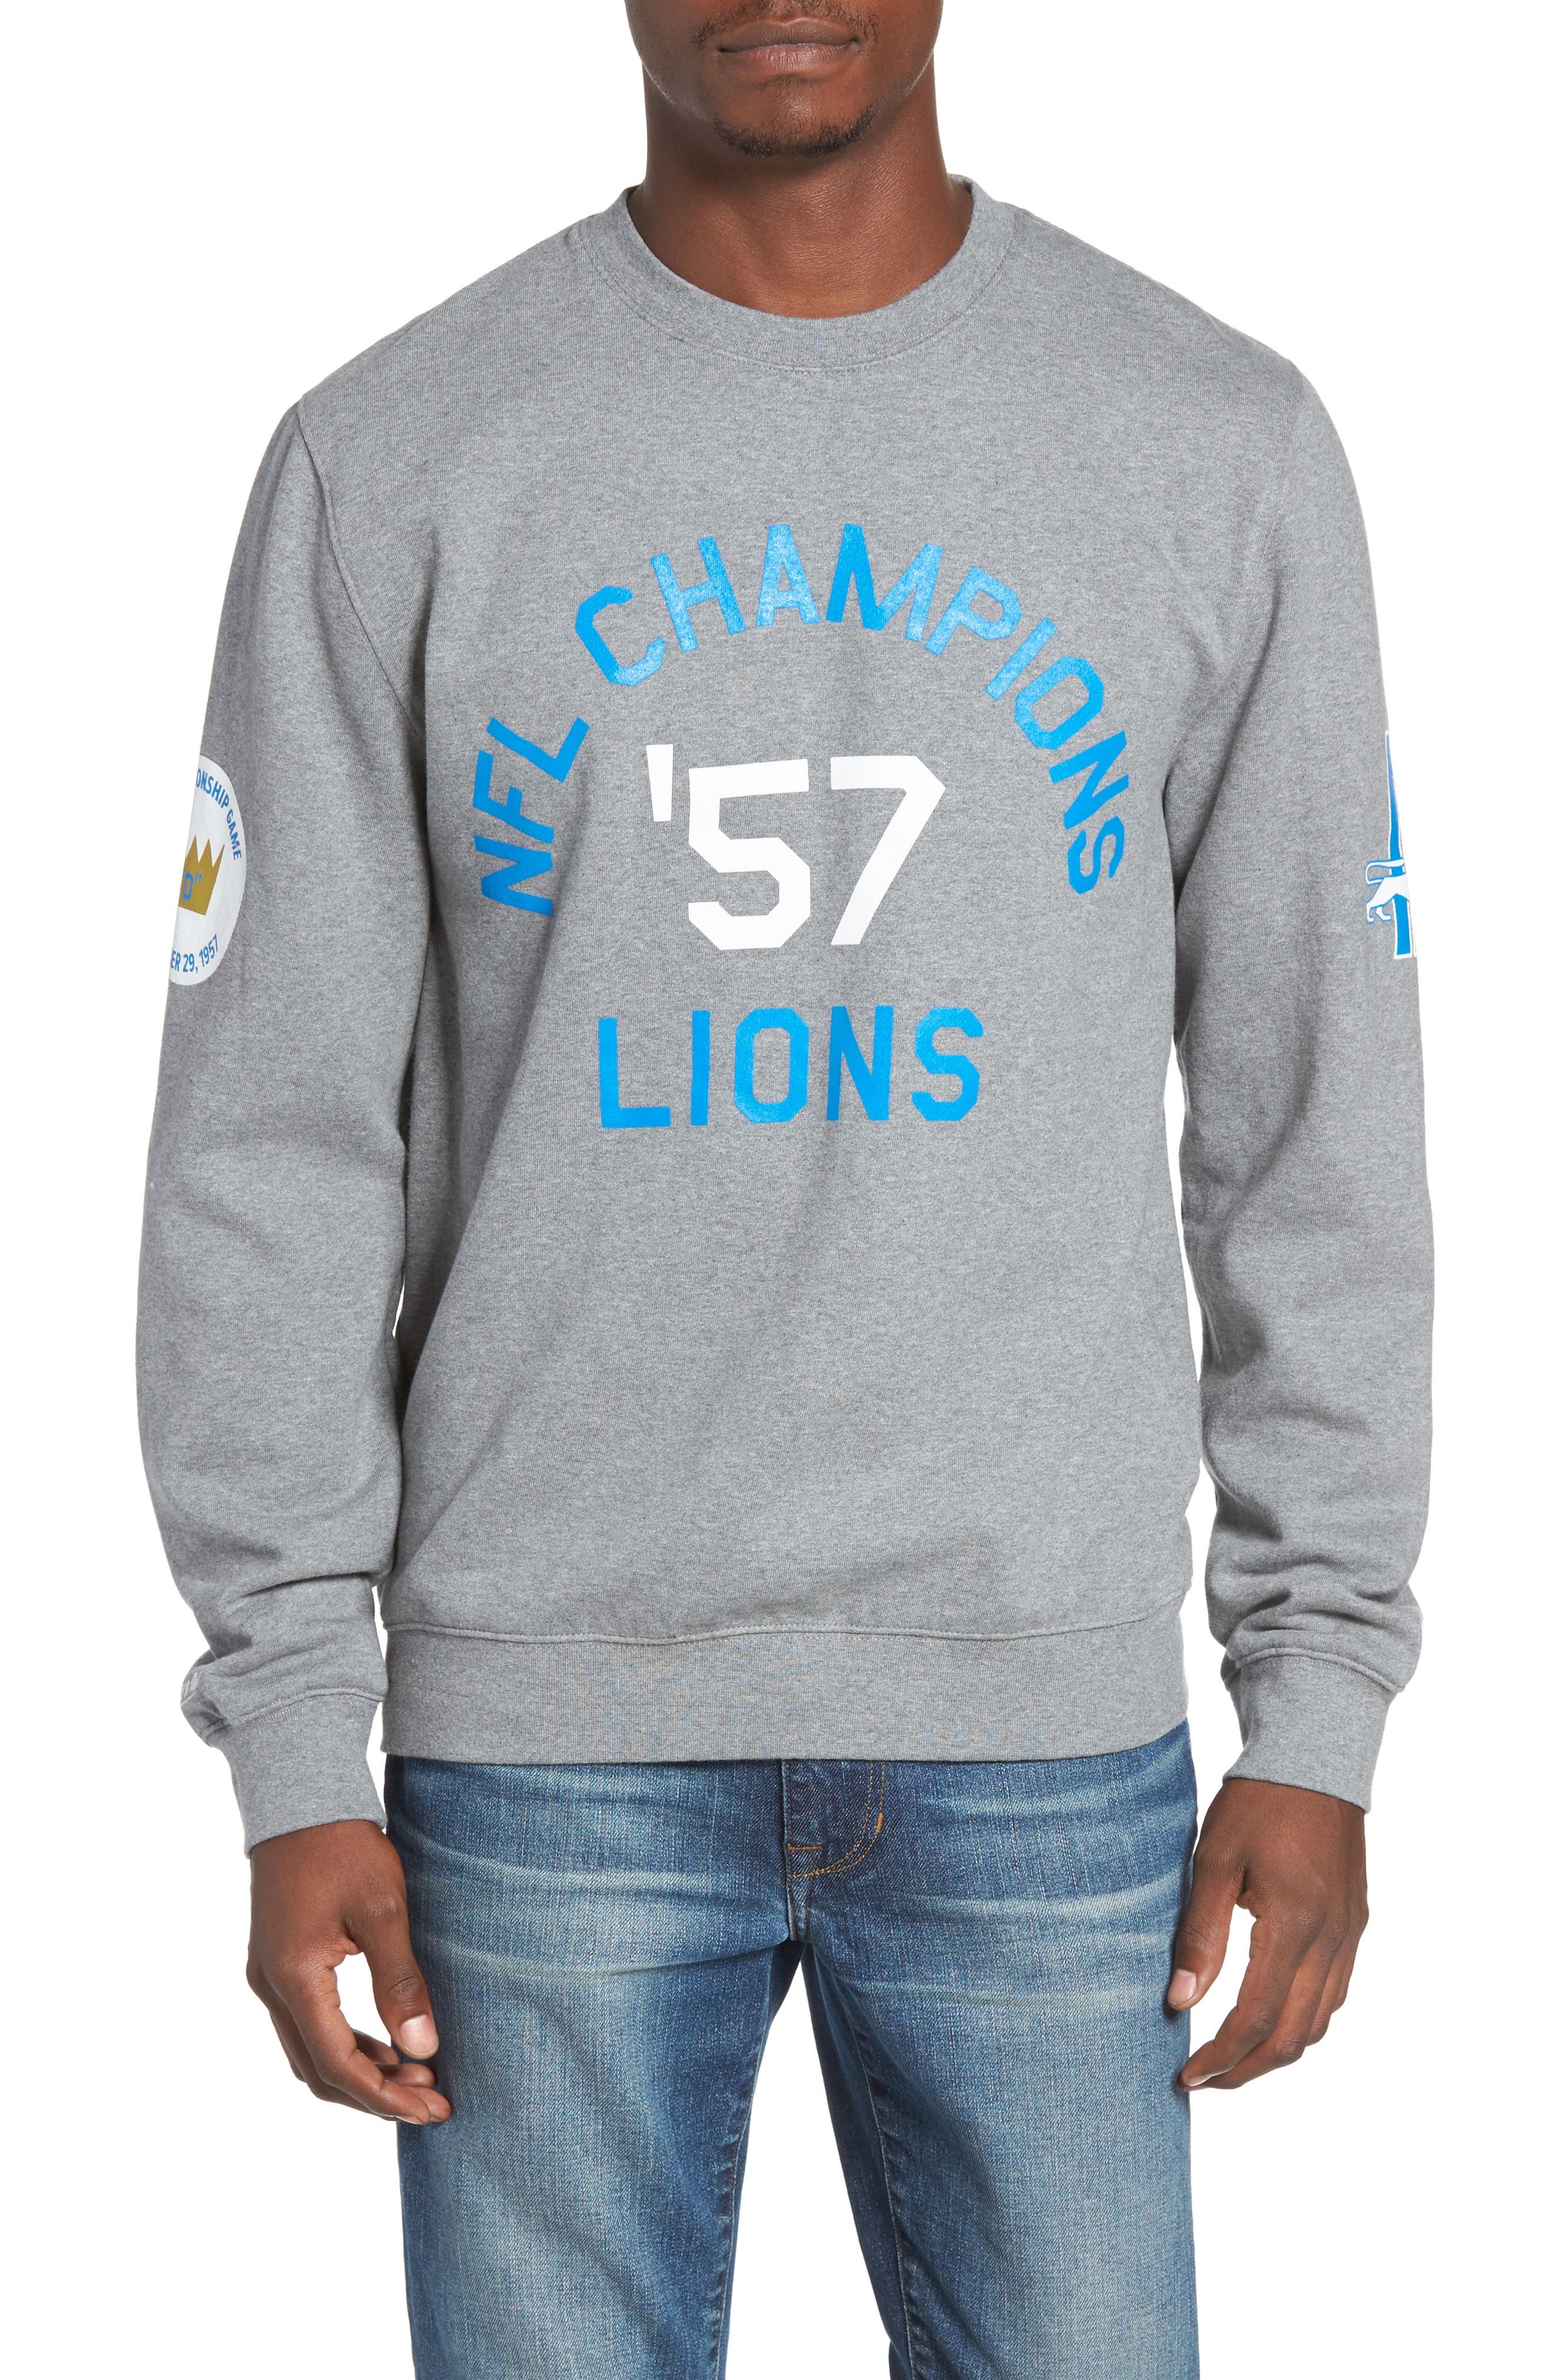 nfl lions sweatshirt